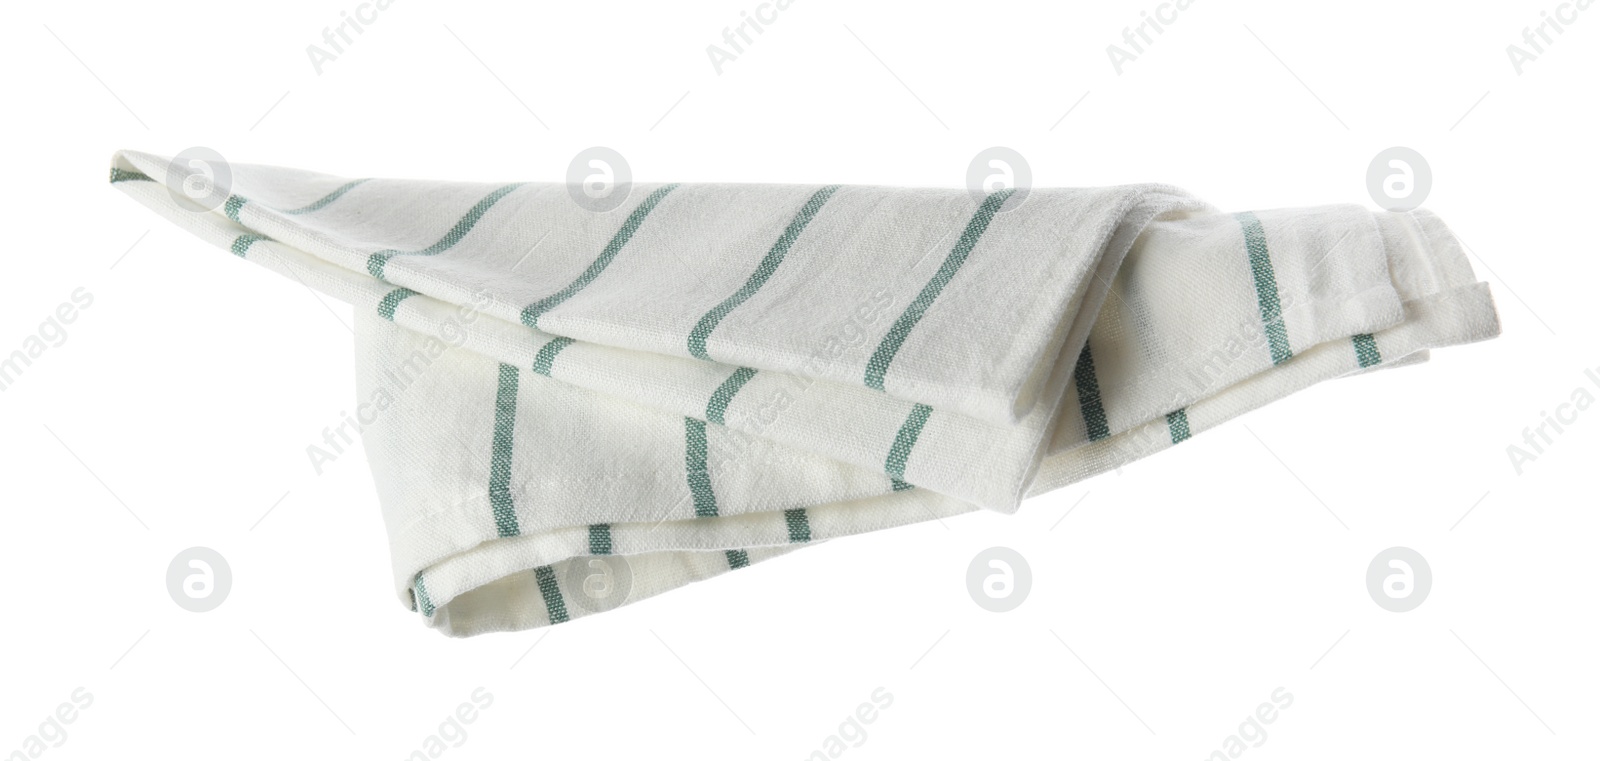 Photo of Soft striped fabric napkin isolated on white